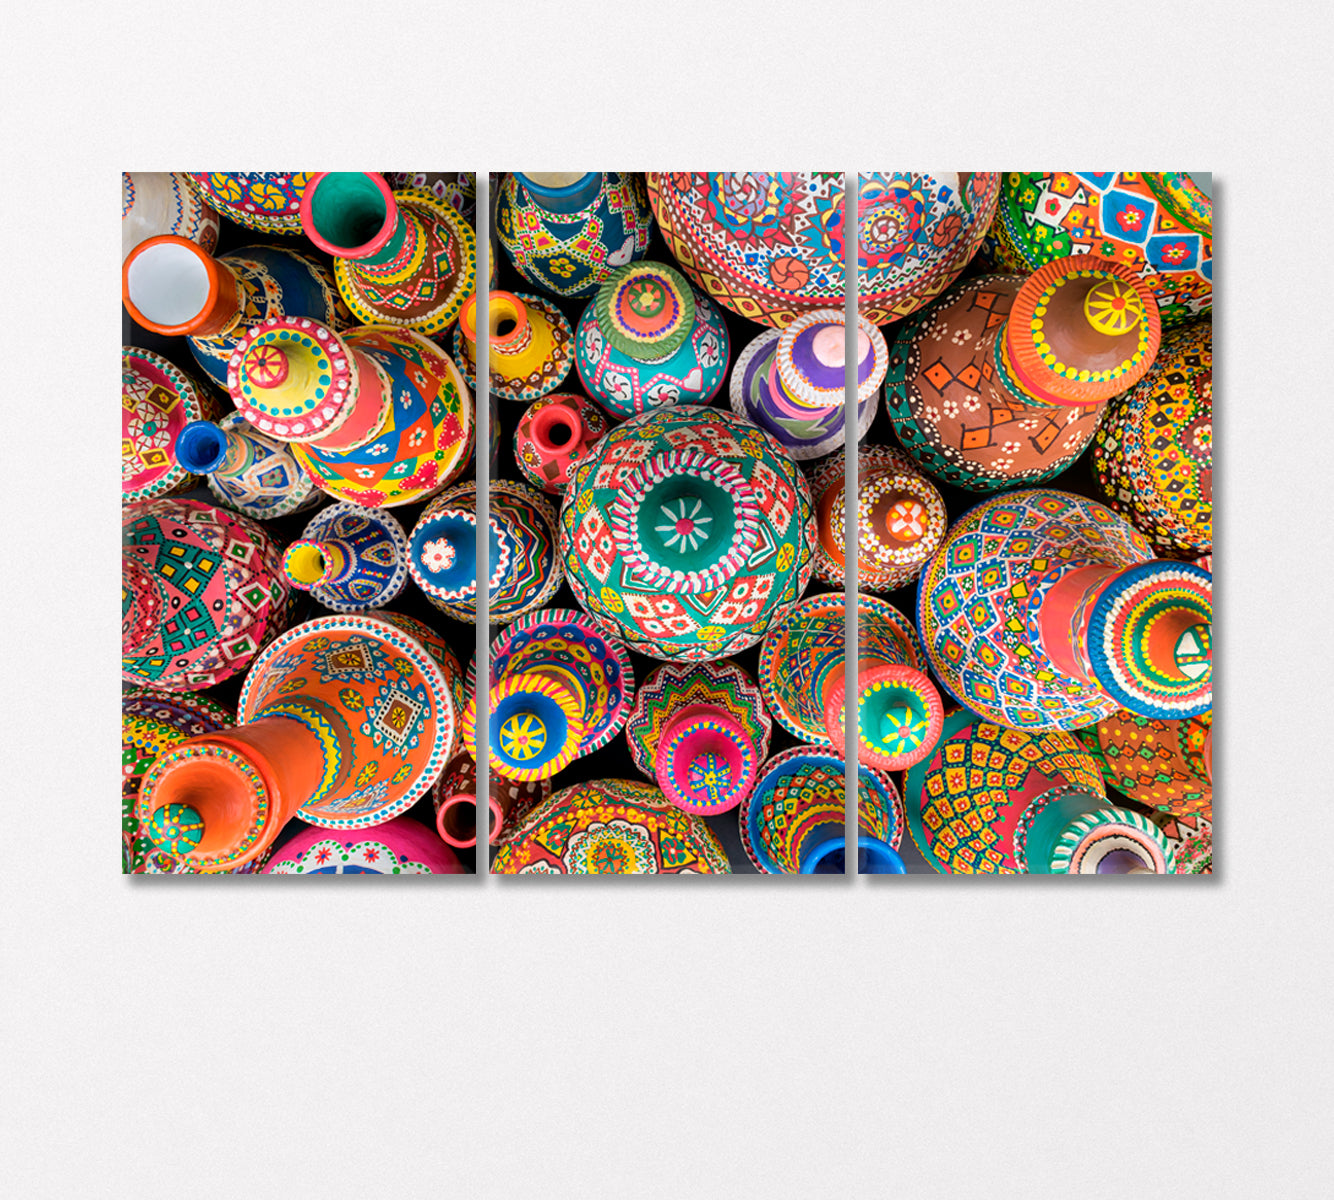 Colorful Hand Painted Ceramic Jugs Canvas Print-Canvas Print-CetArt-3 Panels-36x24 inches-CetArt